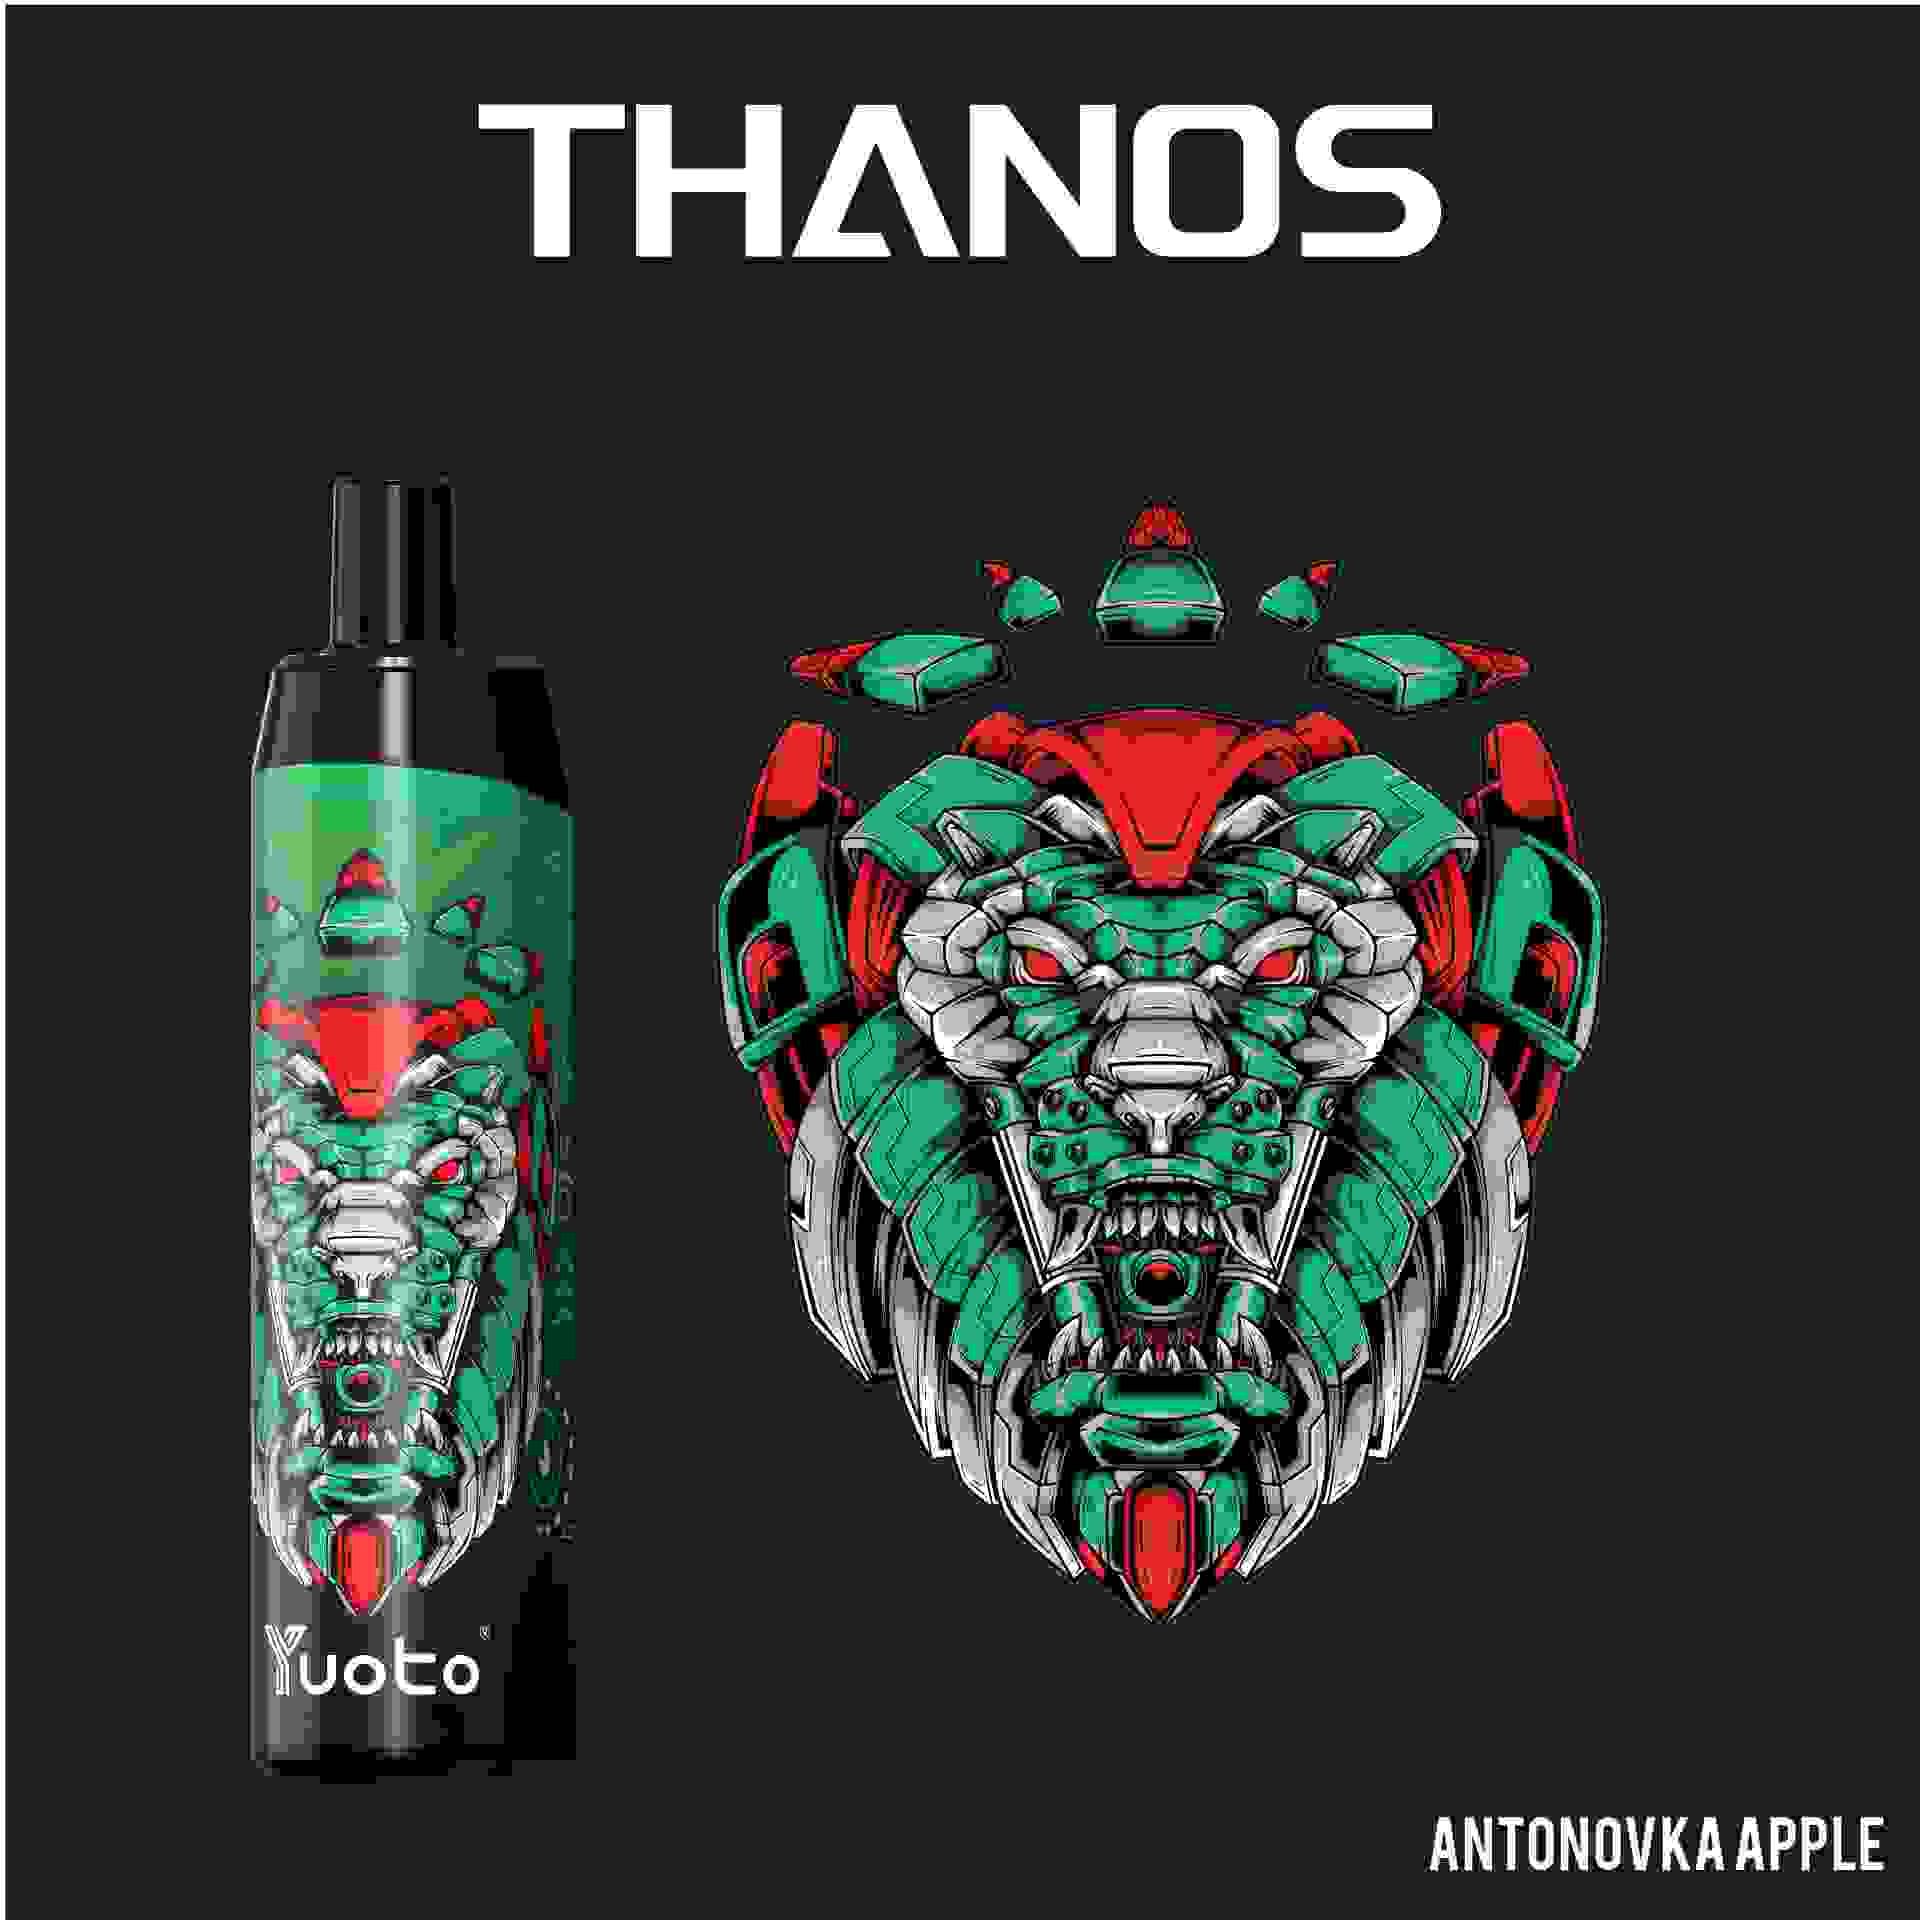 Antonovka Apple - Yuoto Thanos